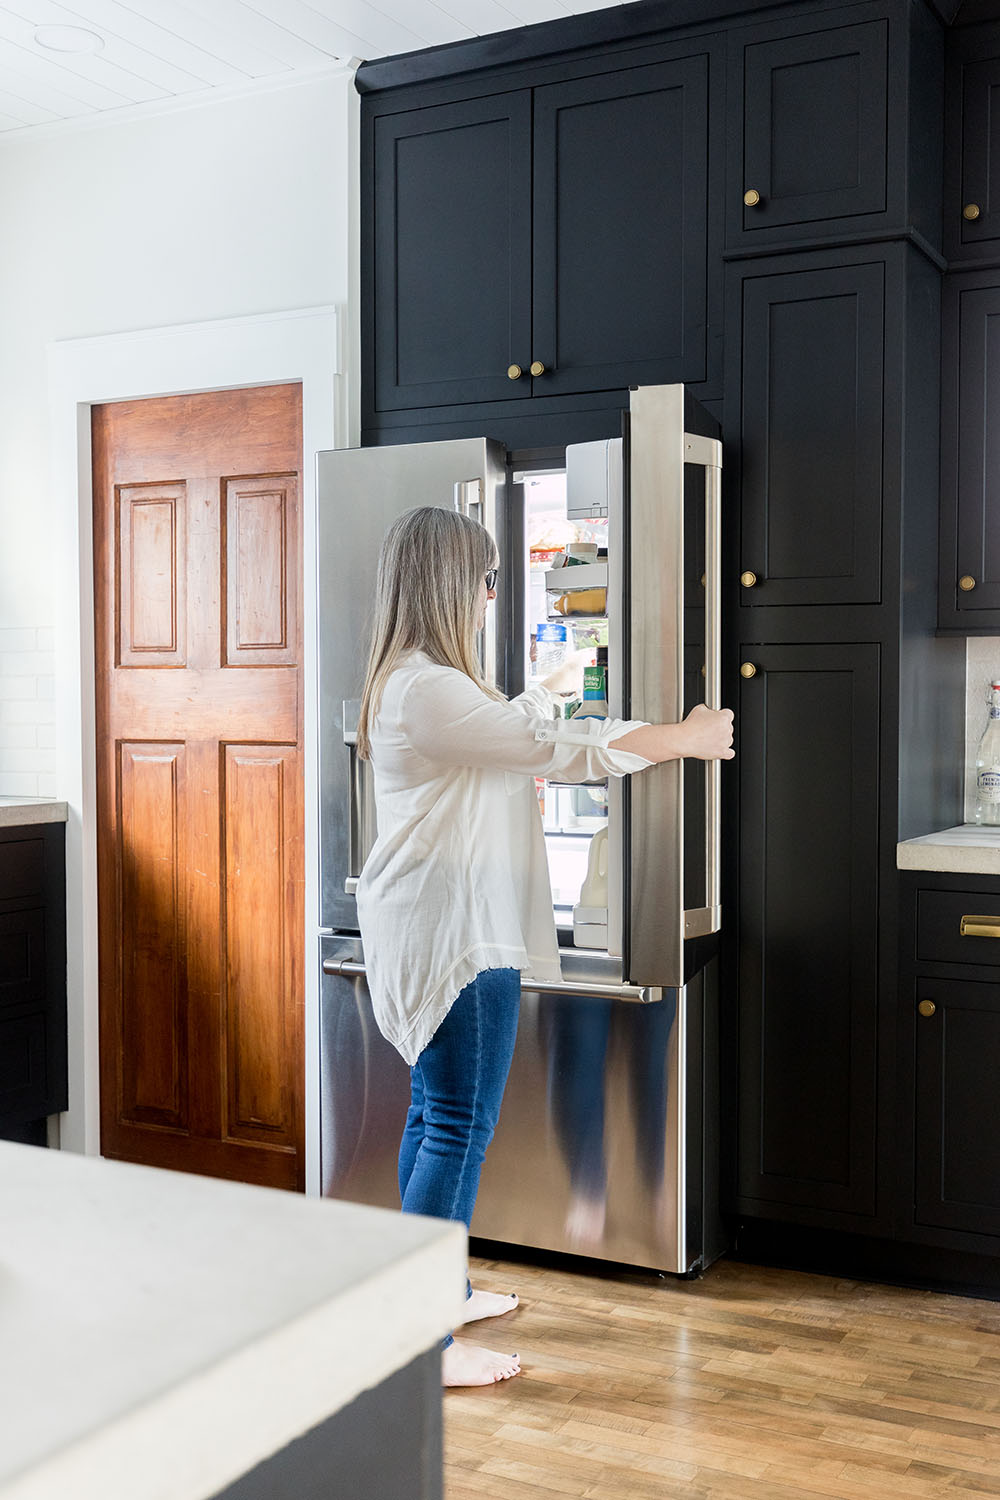 A woman reaches inside a GE Cafe refrigerator.